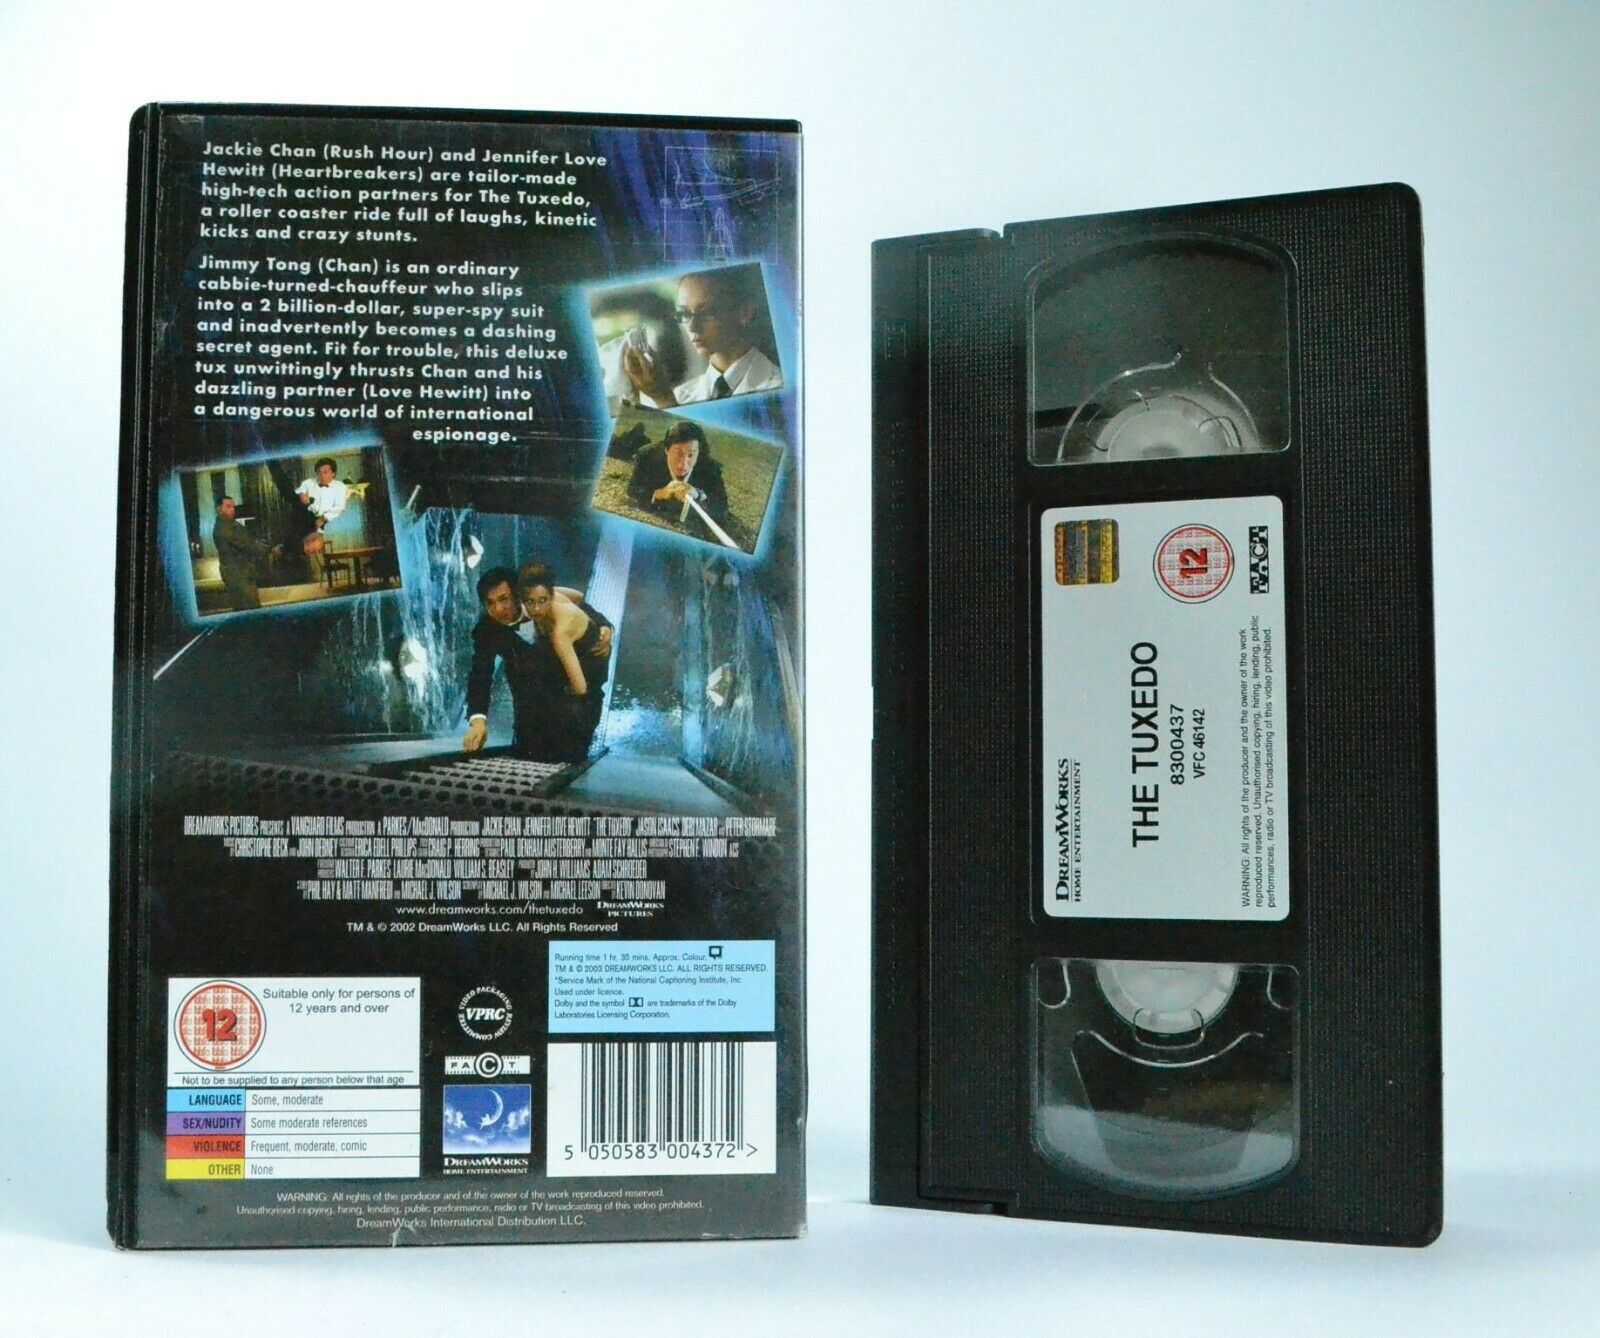 The Tuxedo: K.Donovan Film (2002) - Action Comedy - J.Chan/J.Love-Hewitt - VHS-